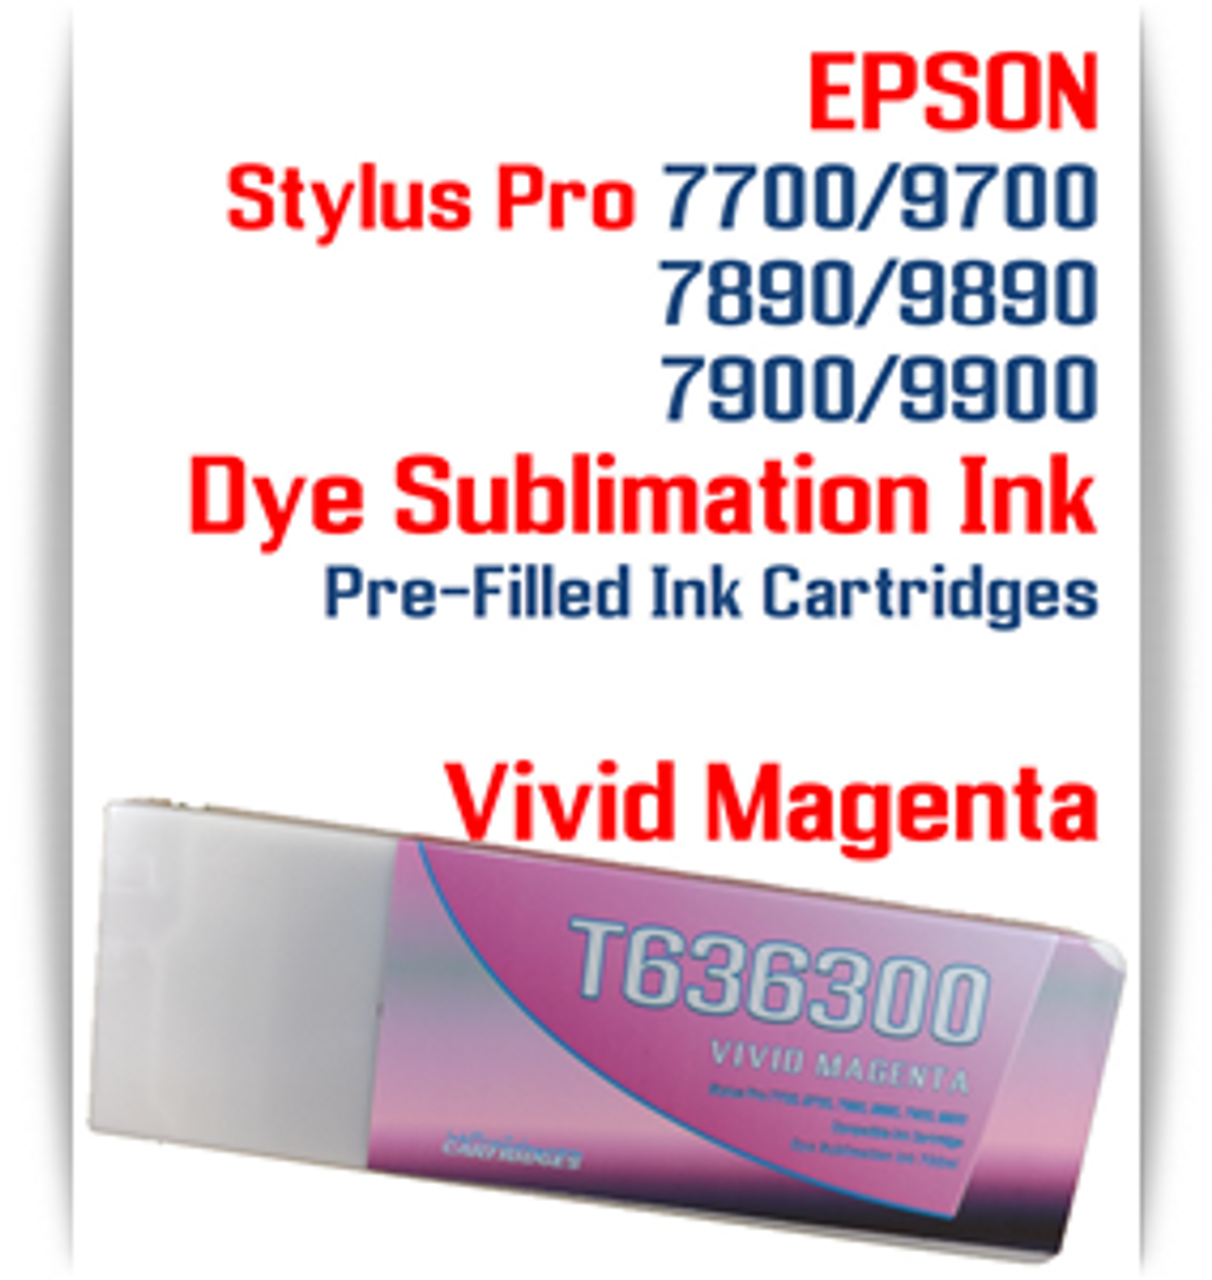 Vivid Magenta Epson Stylus Pro 7900/9900 Pre-Filled Dye Sublimation Ink Cartridge